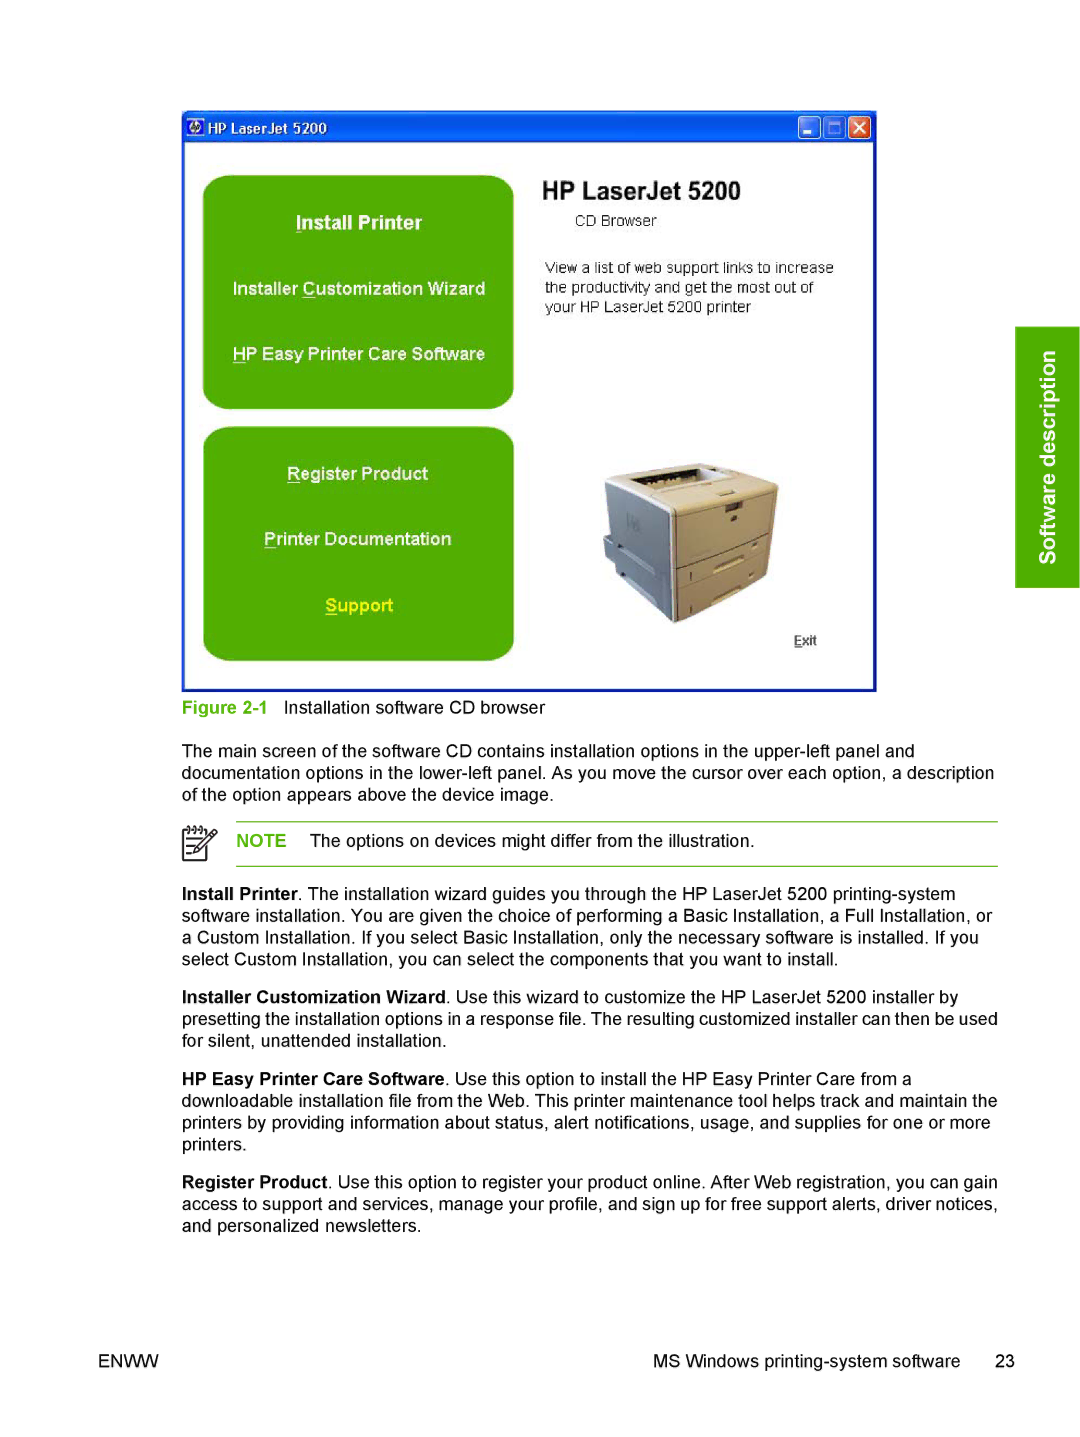 HP 5200L manual MS Windows printing-system software 